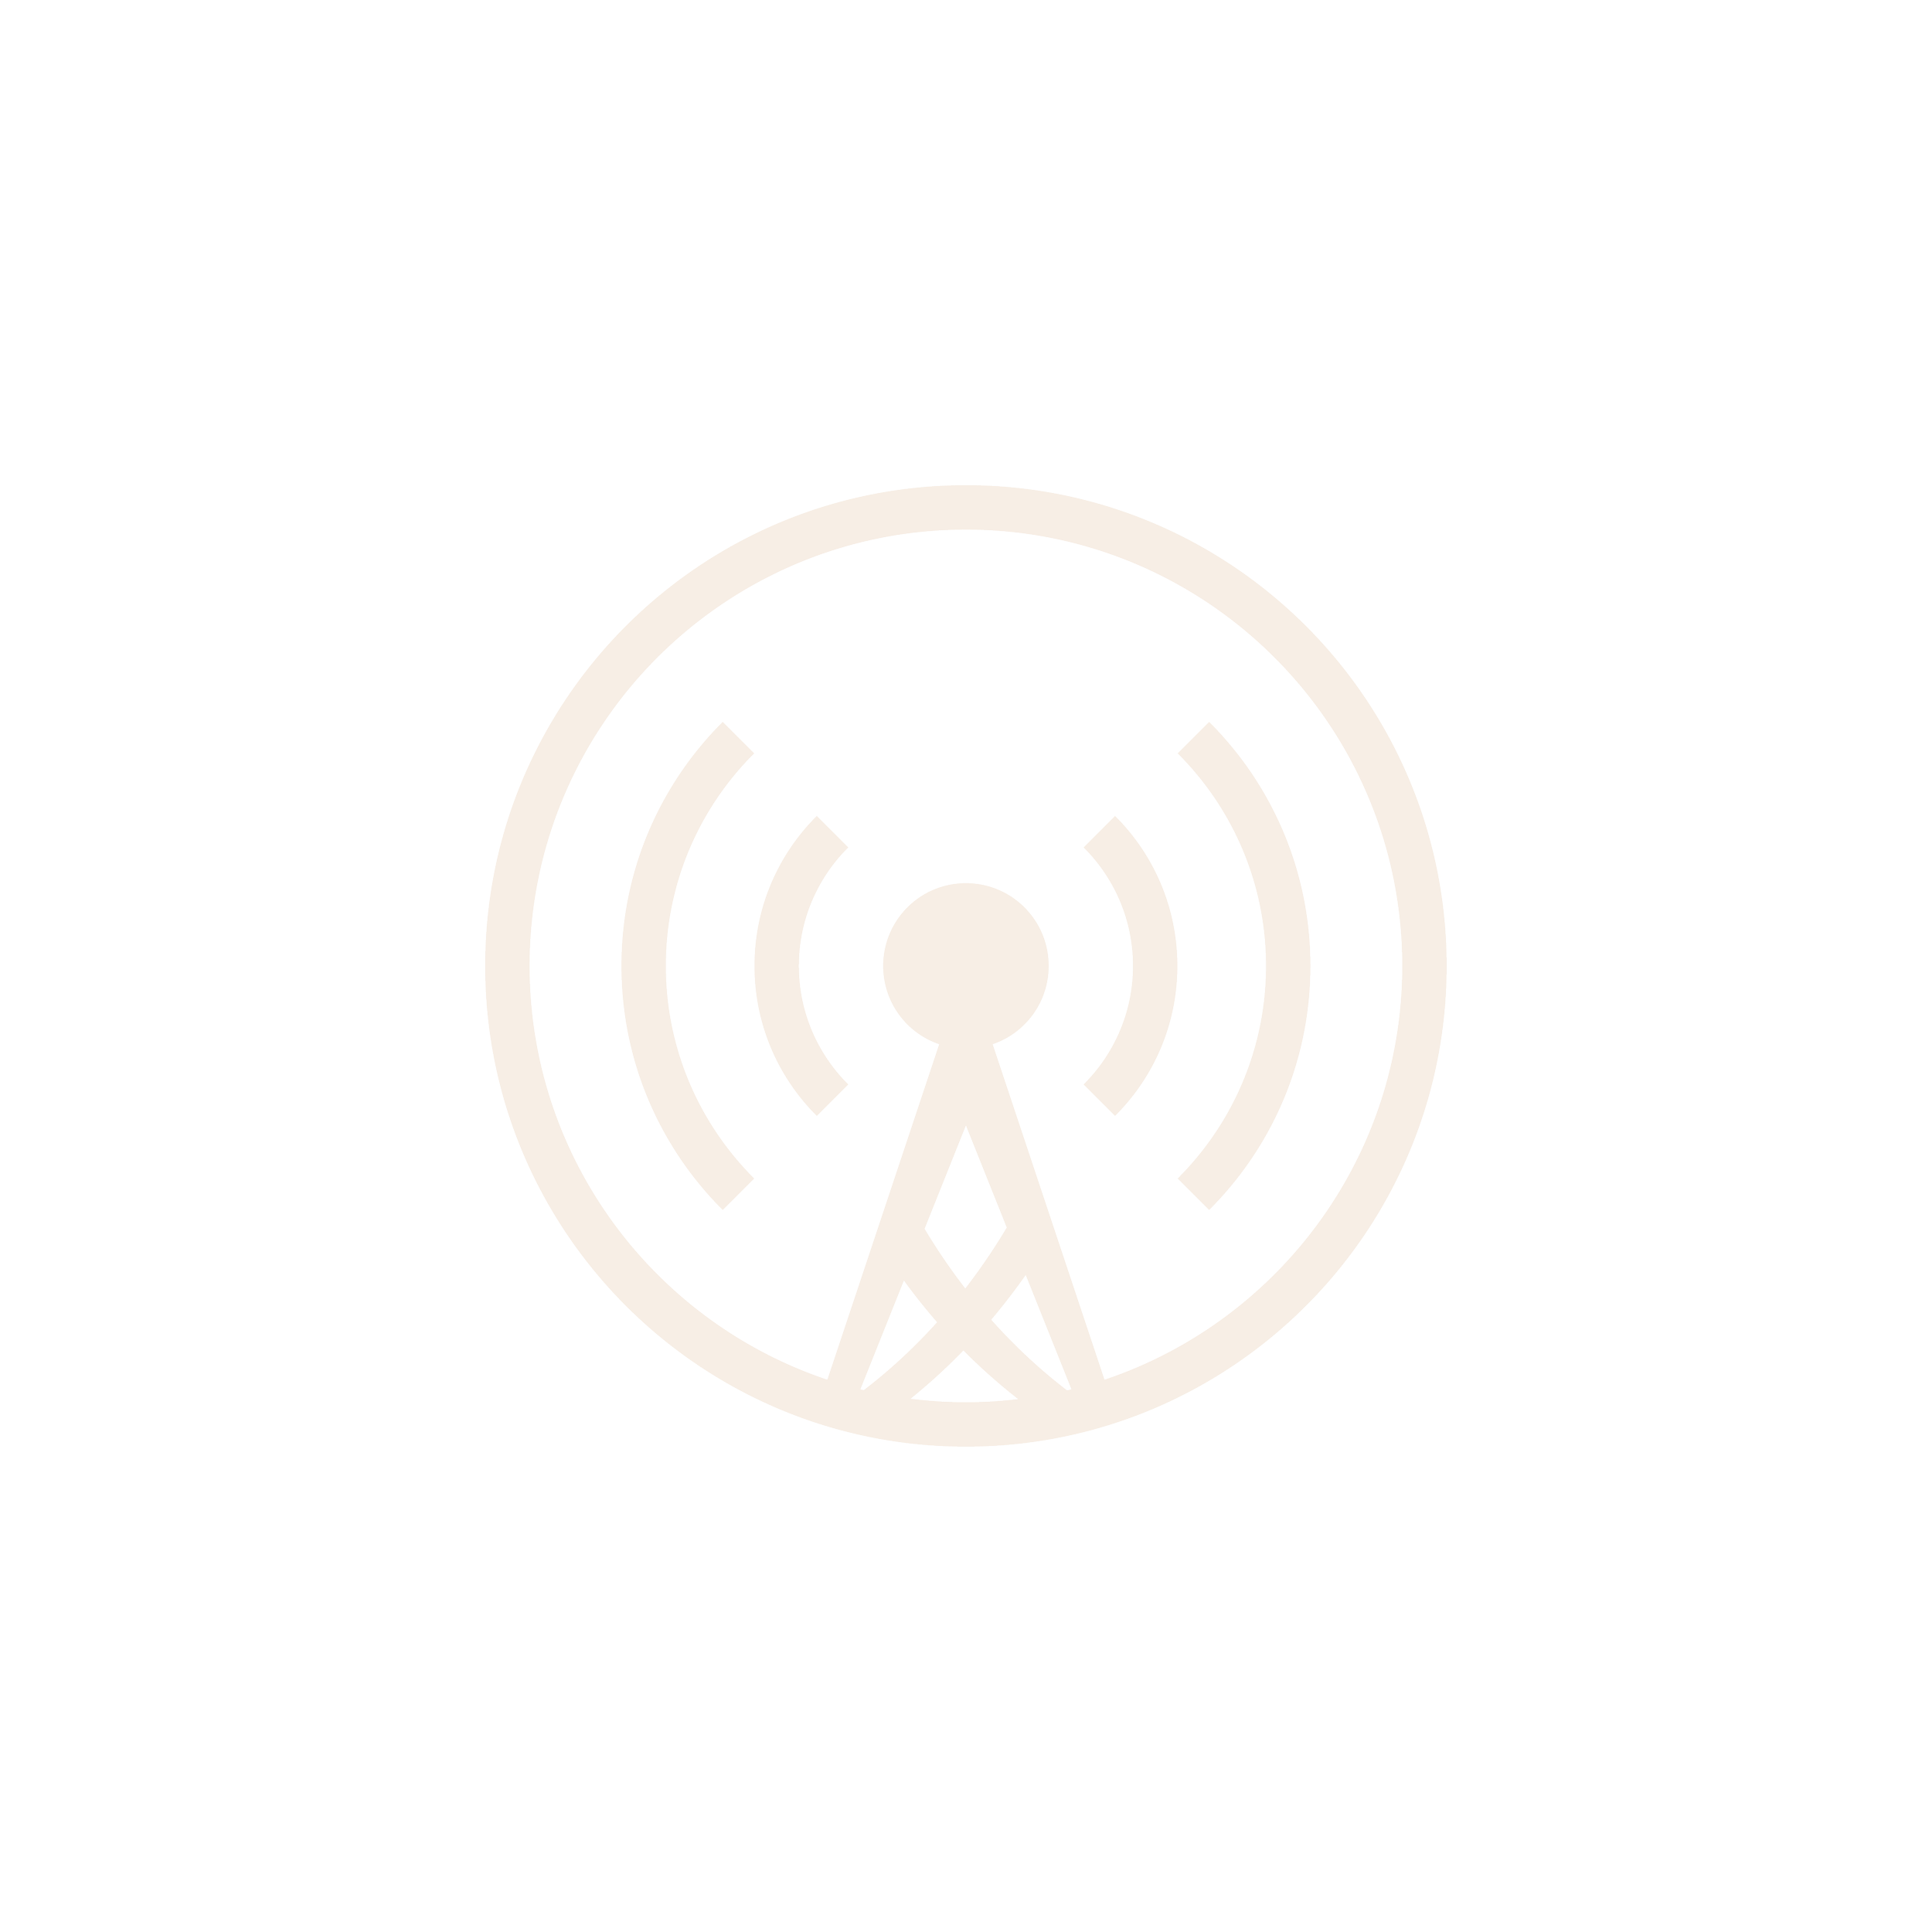 Podcast App Logos_Light-07.png